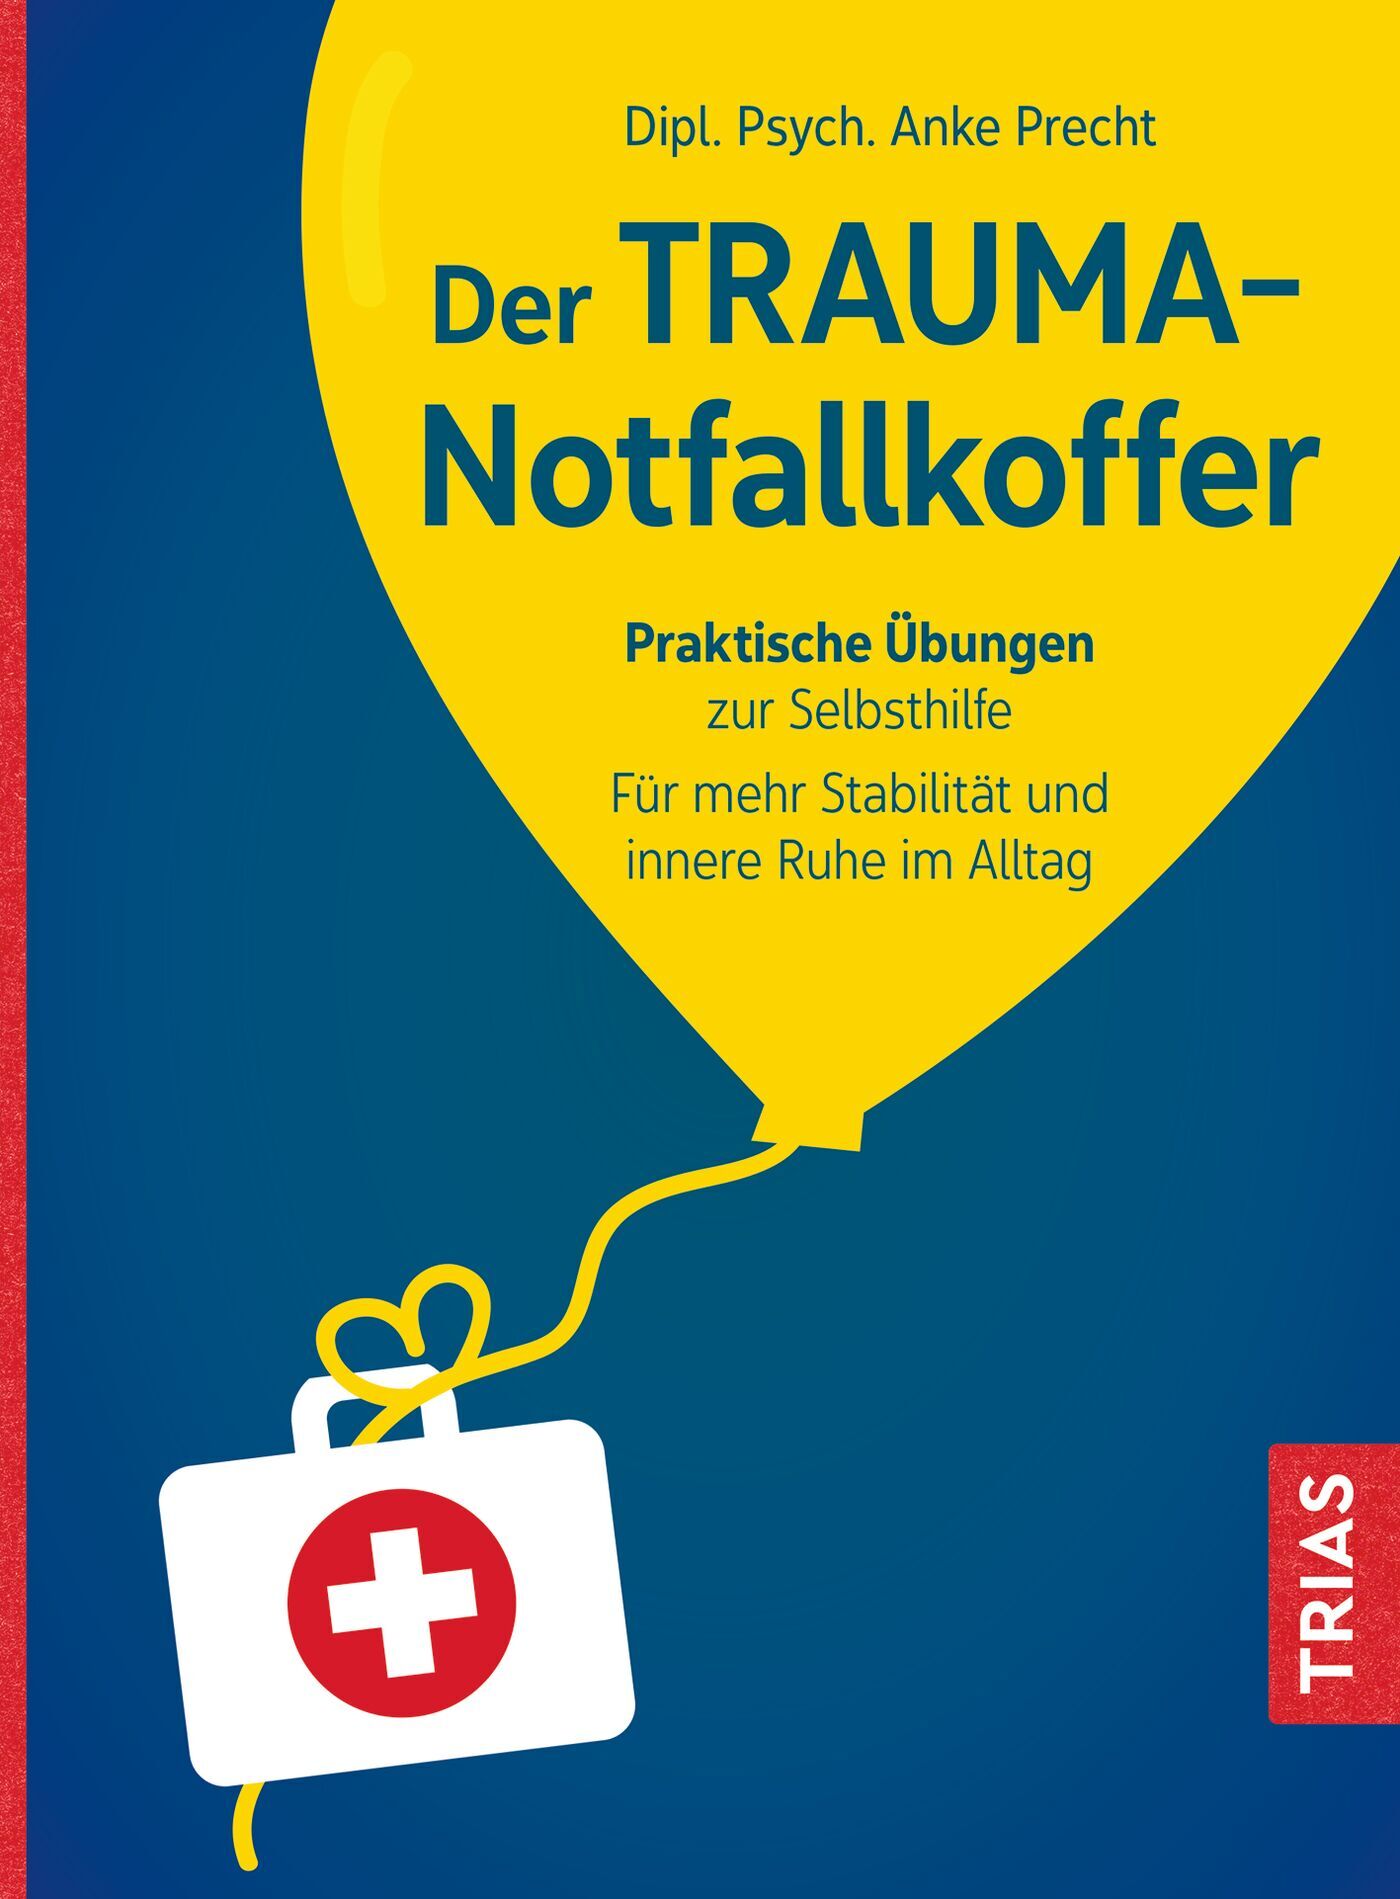 Der Trauma-Notfallkoffer, 9783432117256